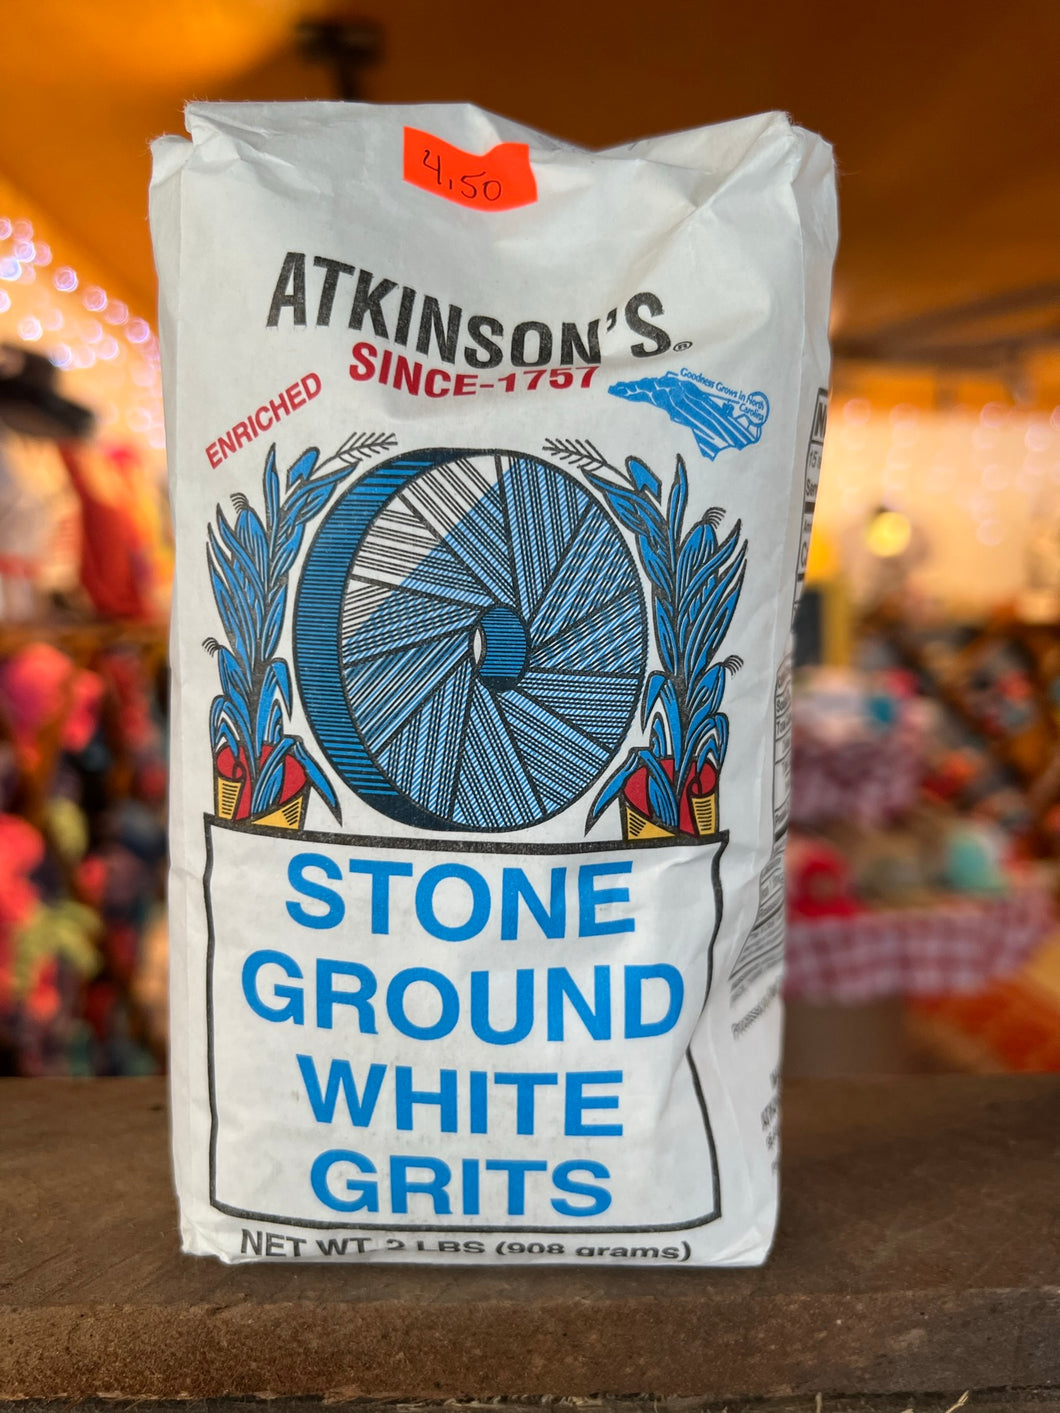 Atkinson's stone ground white grits